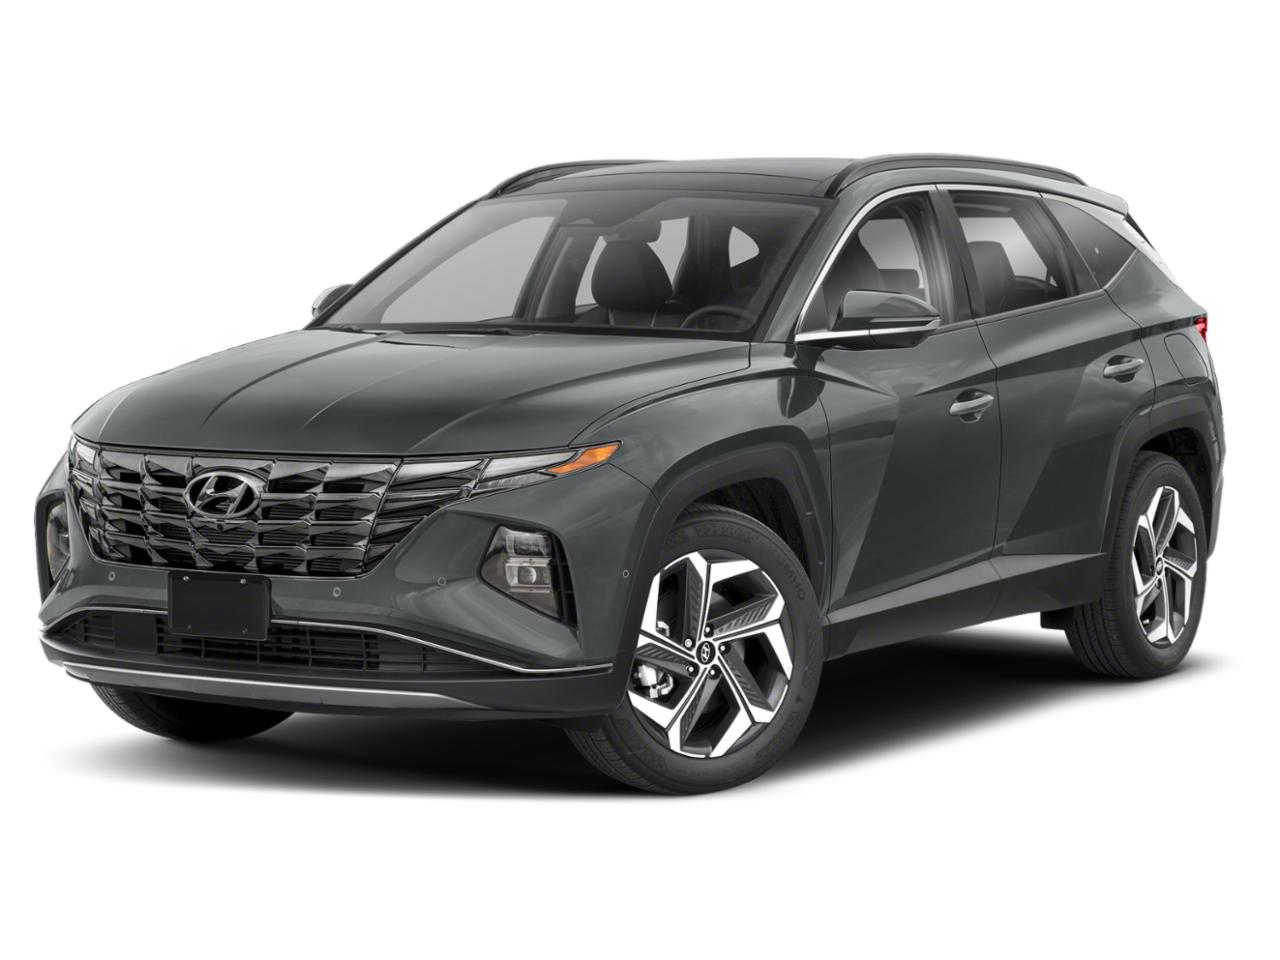 2022 Hyundai Tucson Limited AWD Portofino Gray Limited AWD. A Hyundai